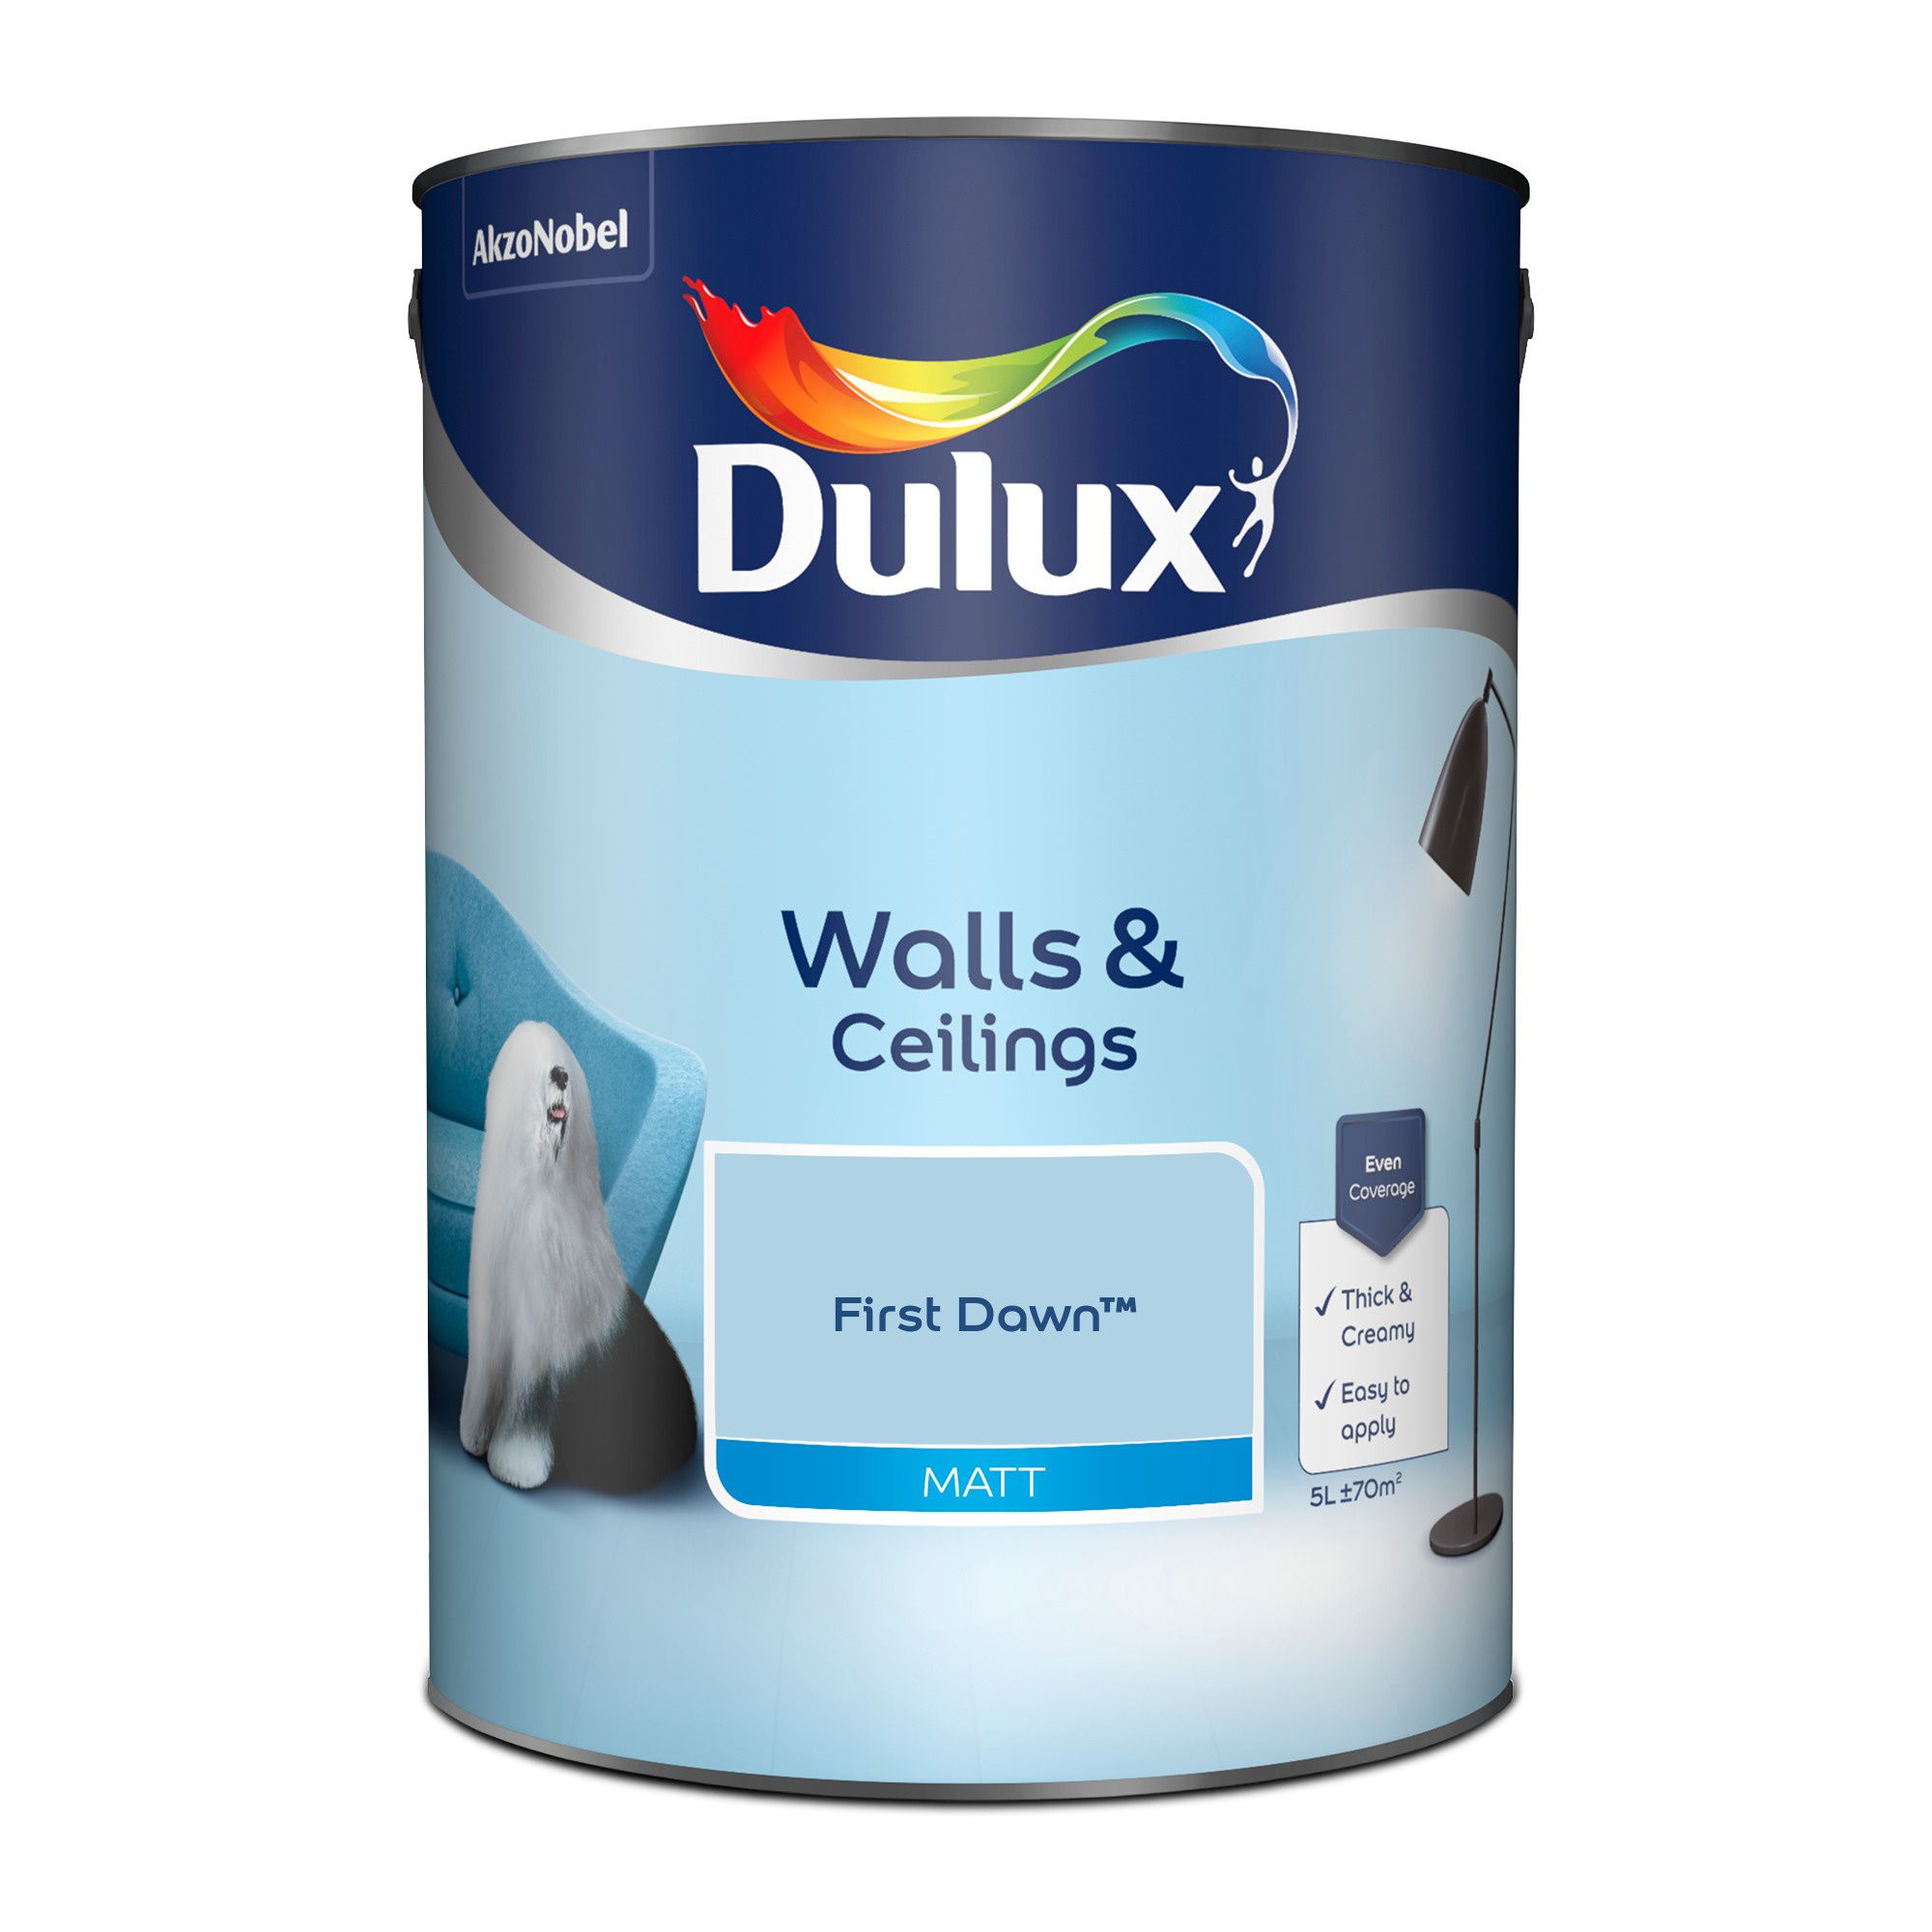 Dulux Walls & ceilings First dawn Matt Emulsion paint, 5L